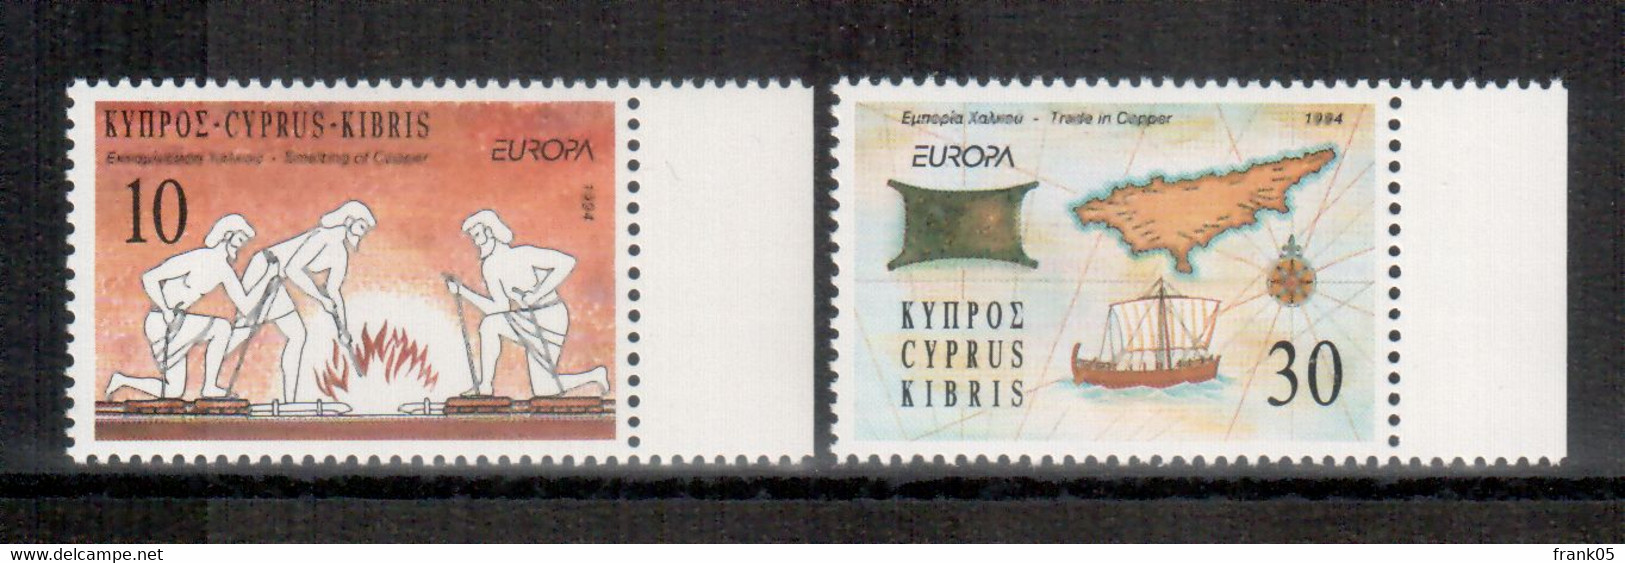 Zypern / Cyprus / Chypre 1994 Satz/set EUROPA ** - 1994